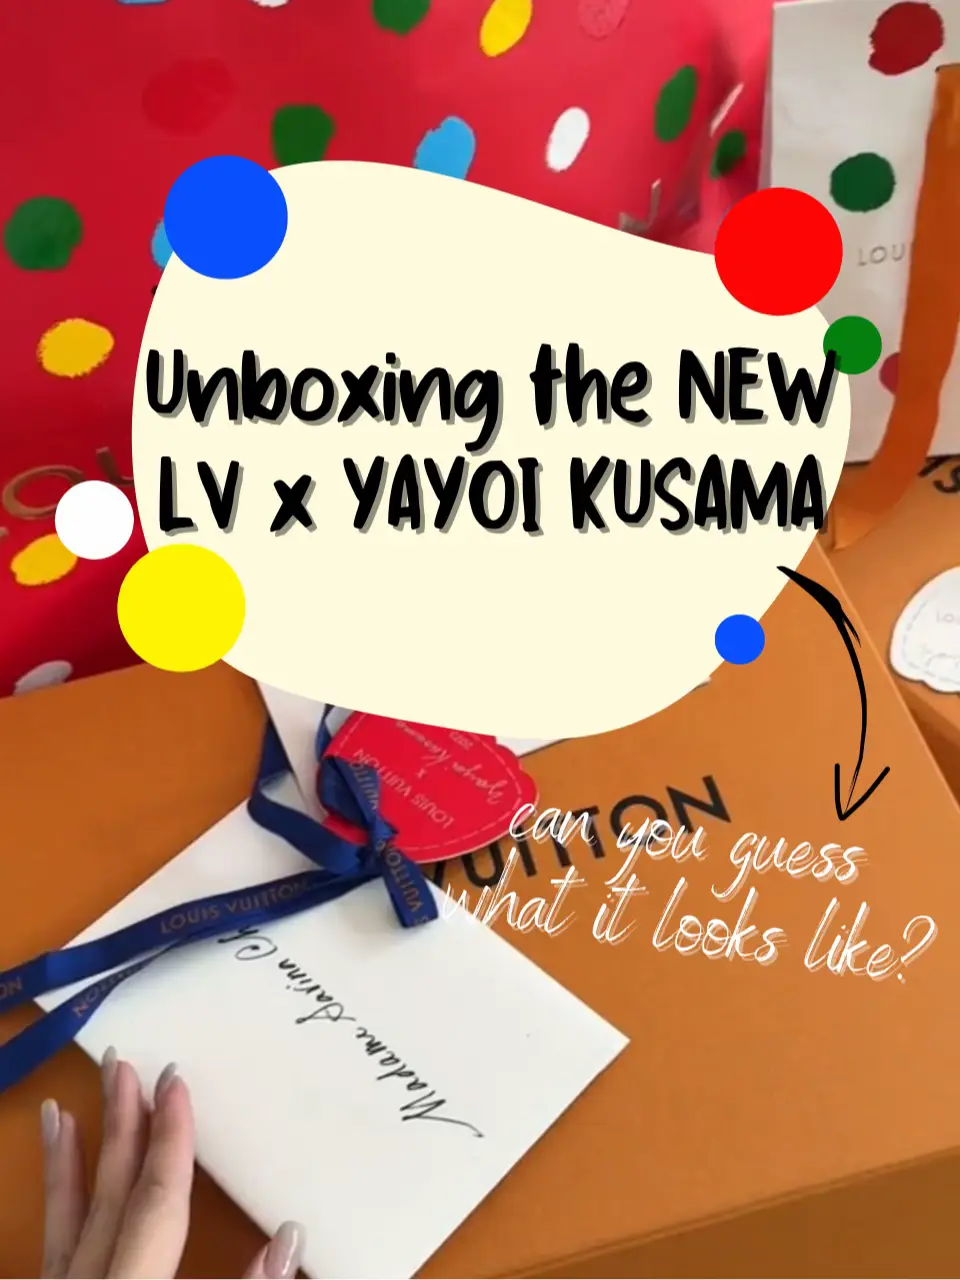 Louis Vuitton on X: #YayoiKusama in Tokyo. Following her